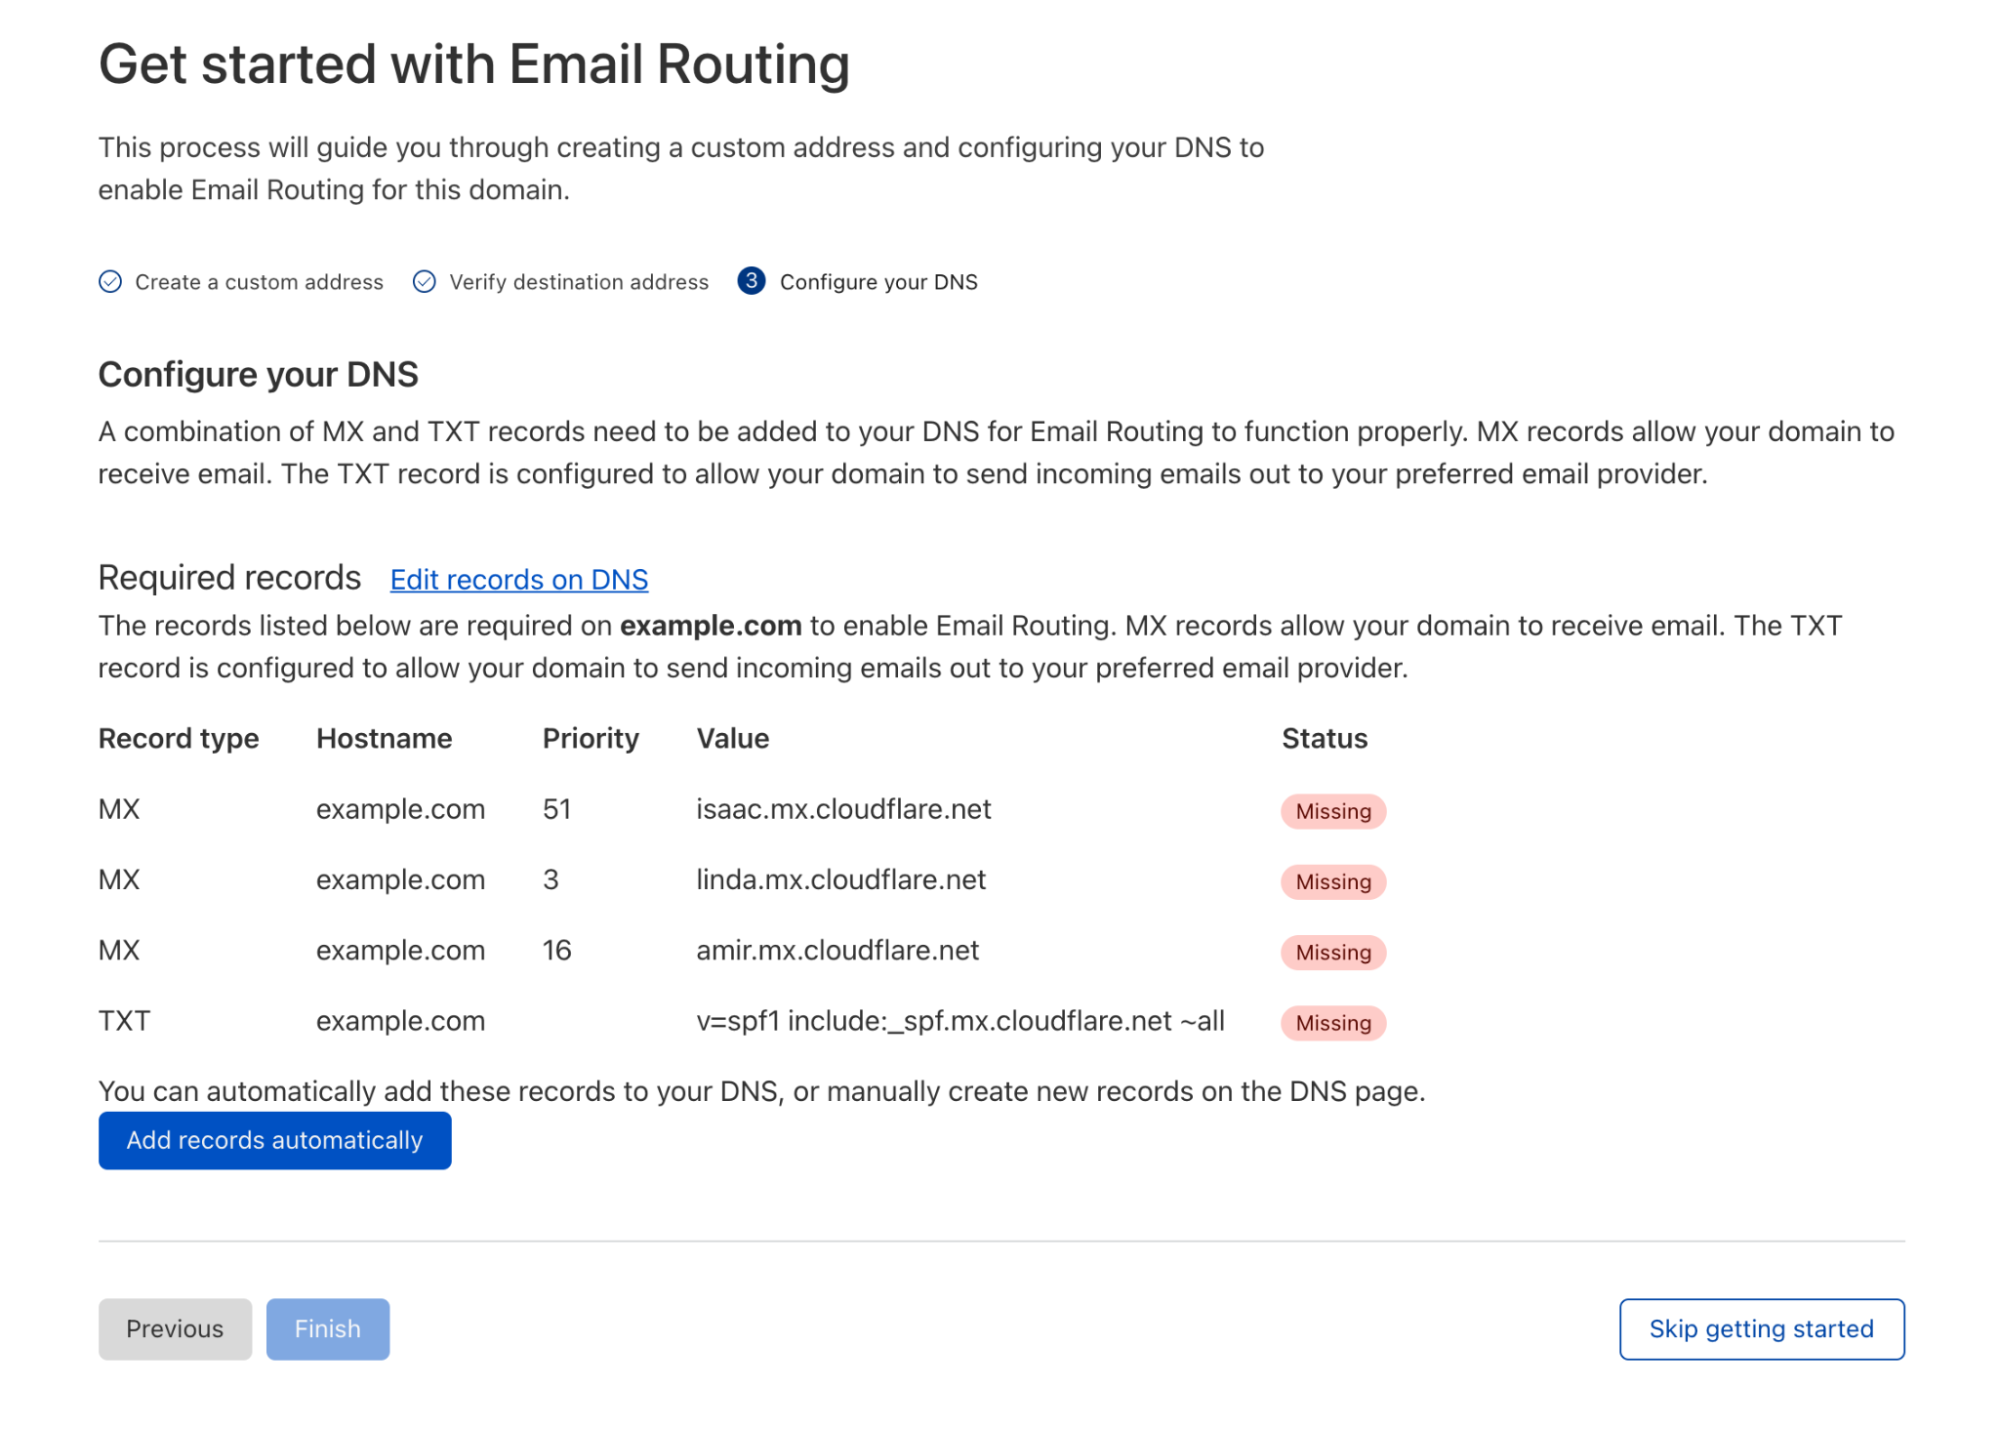 Переход на маршрутизацию электронной почты Cloudflare